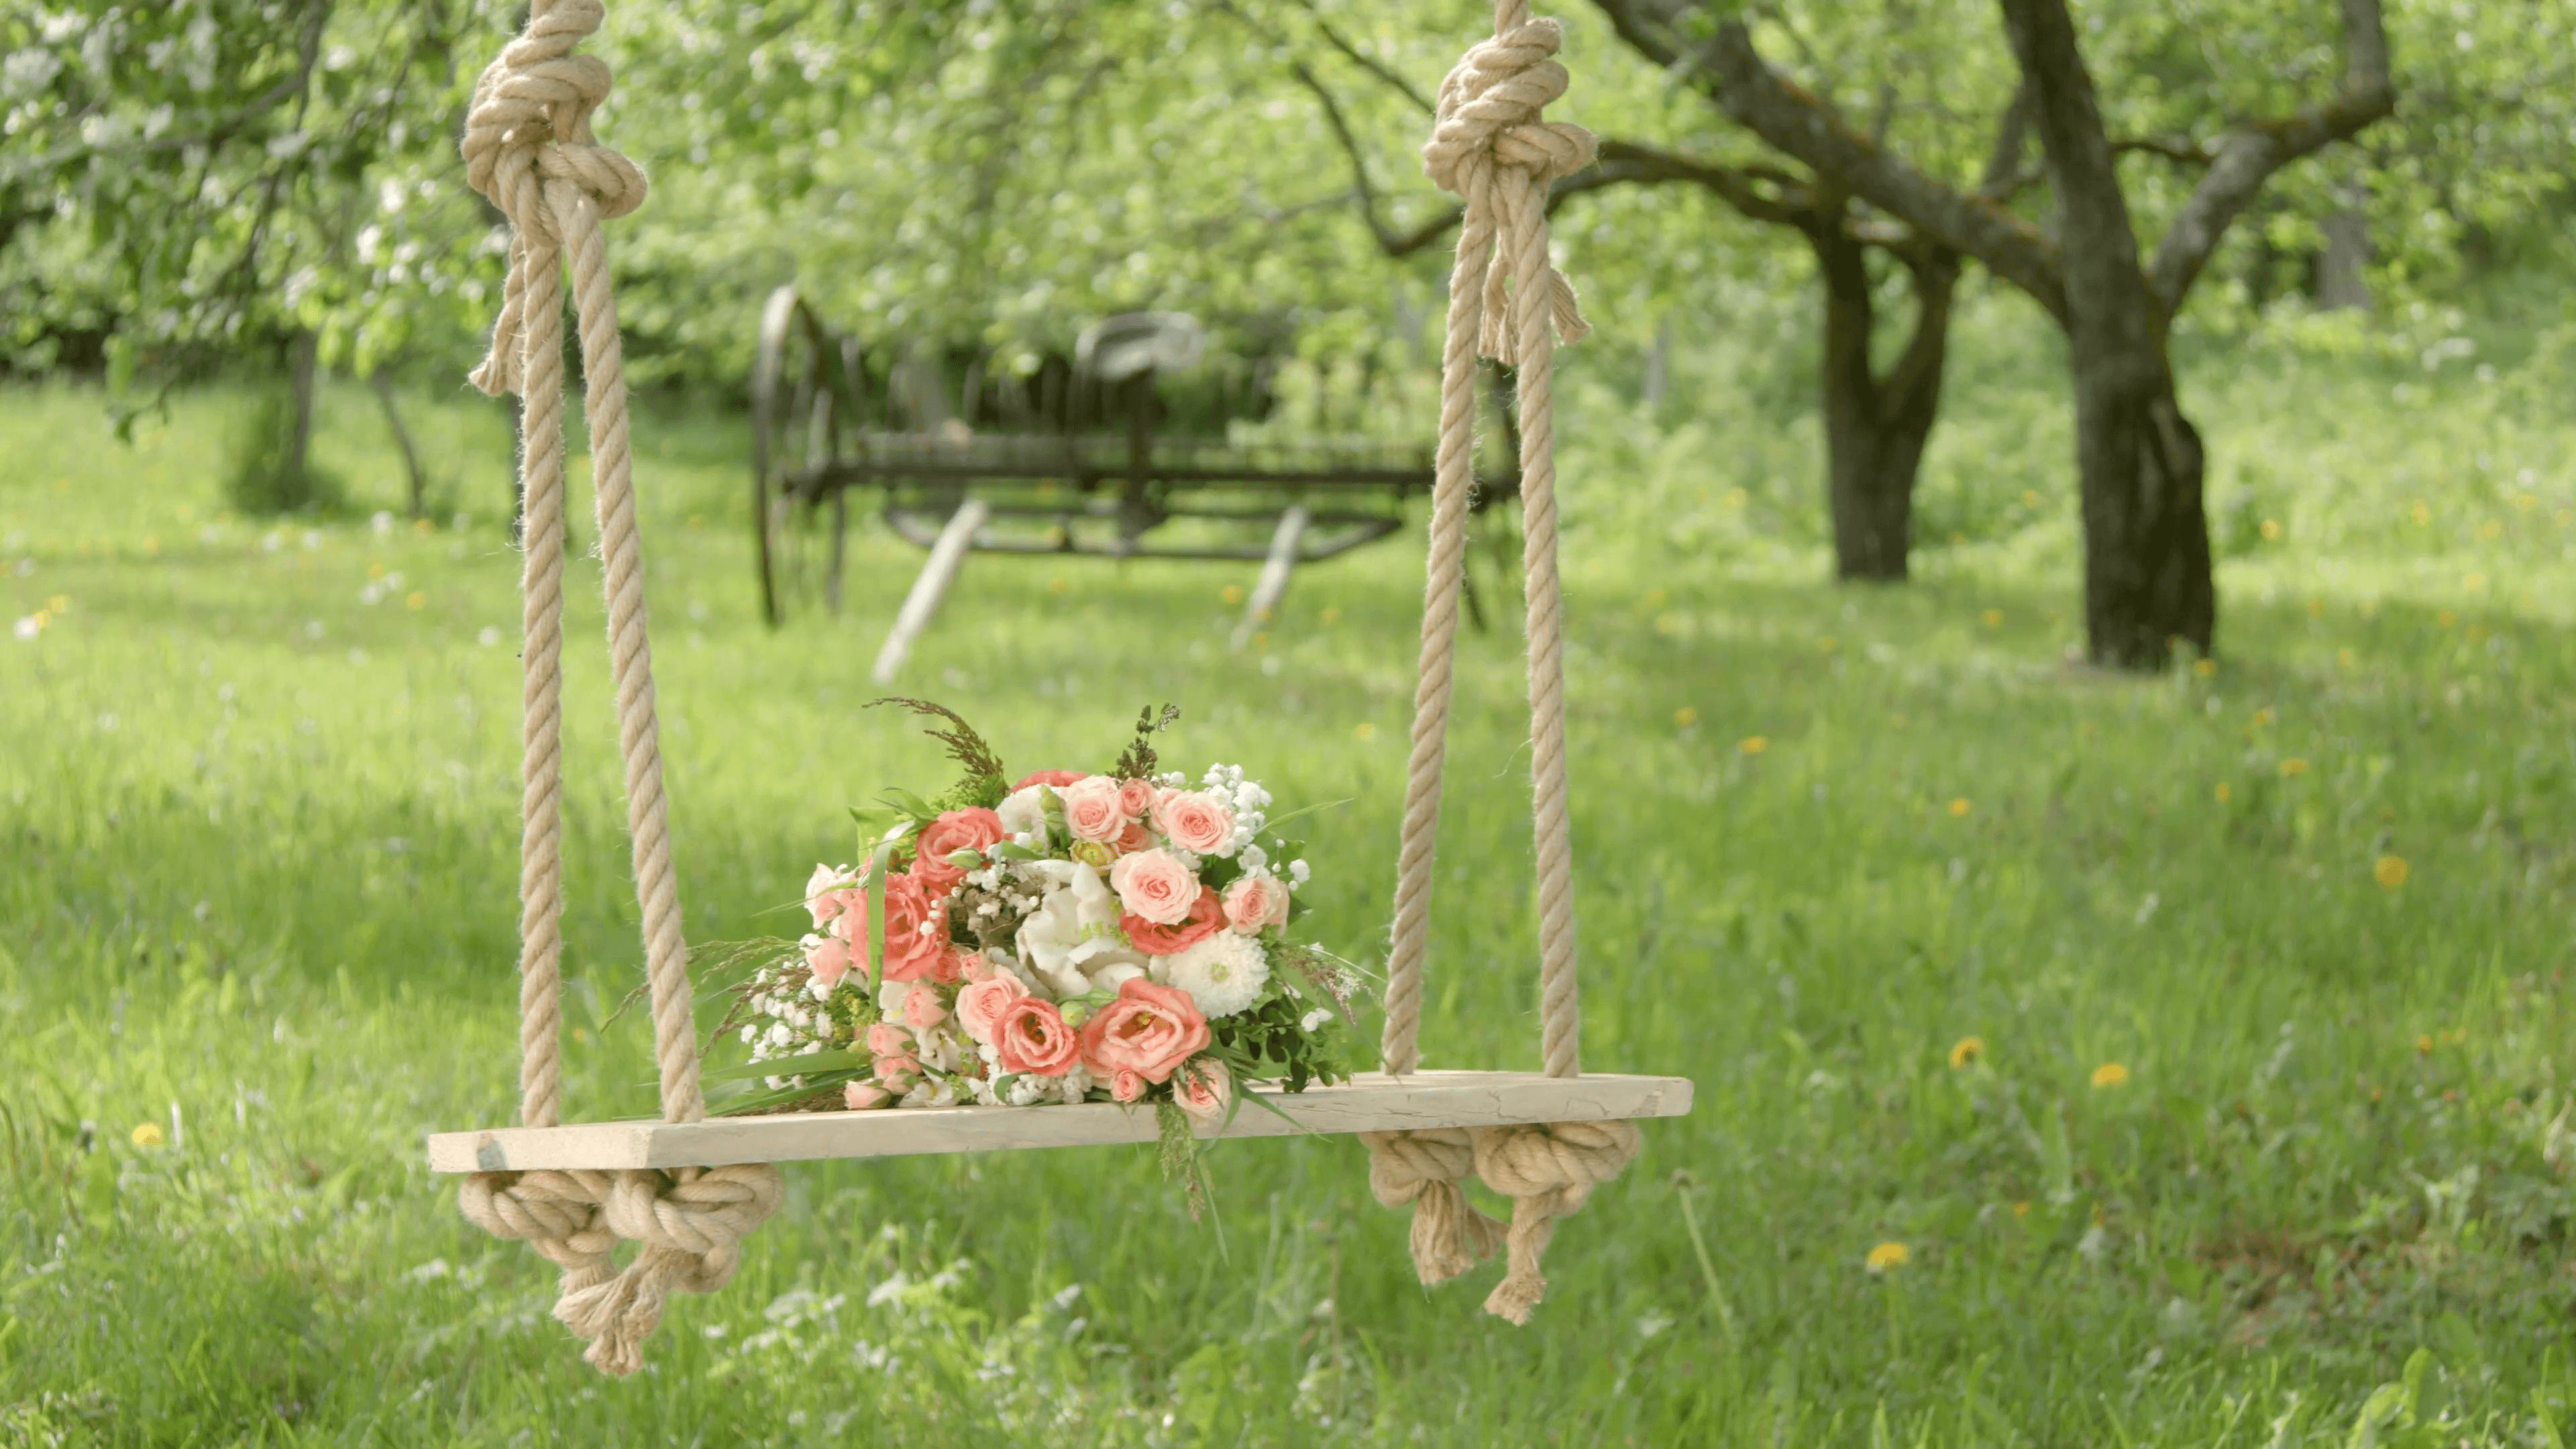 Flowers on rope wedding swing in garden background Stock Video